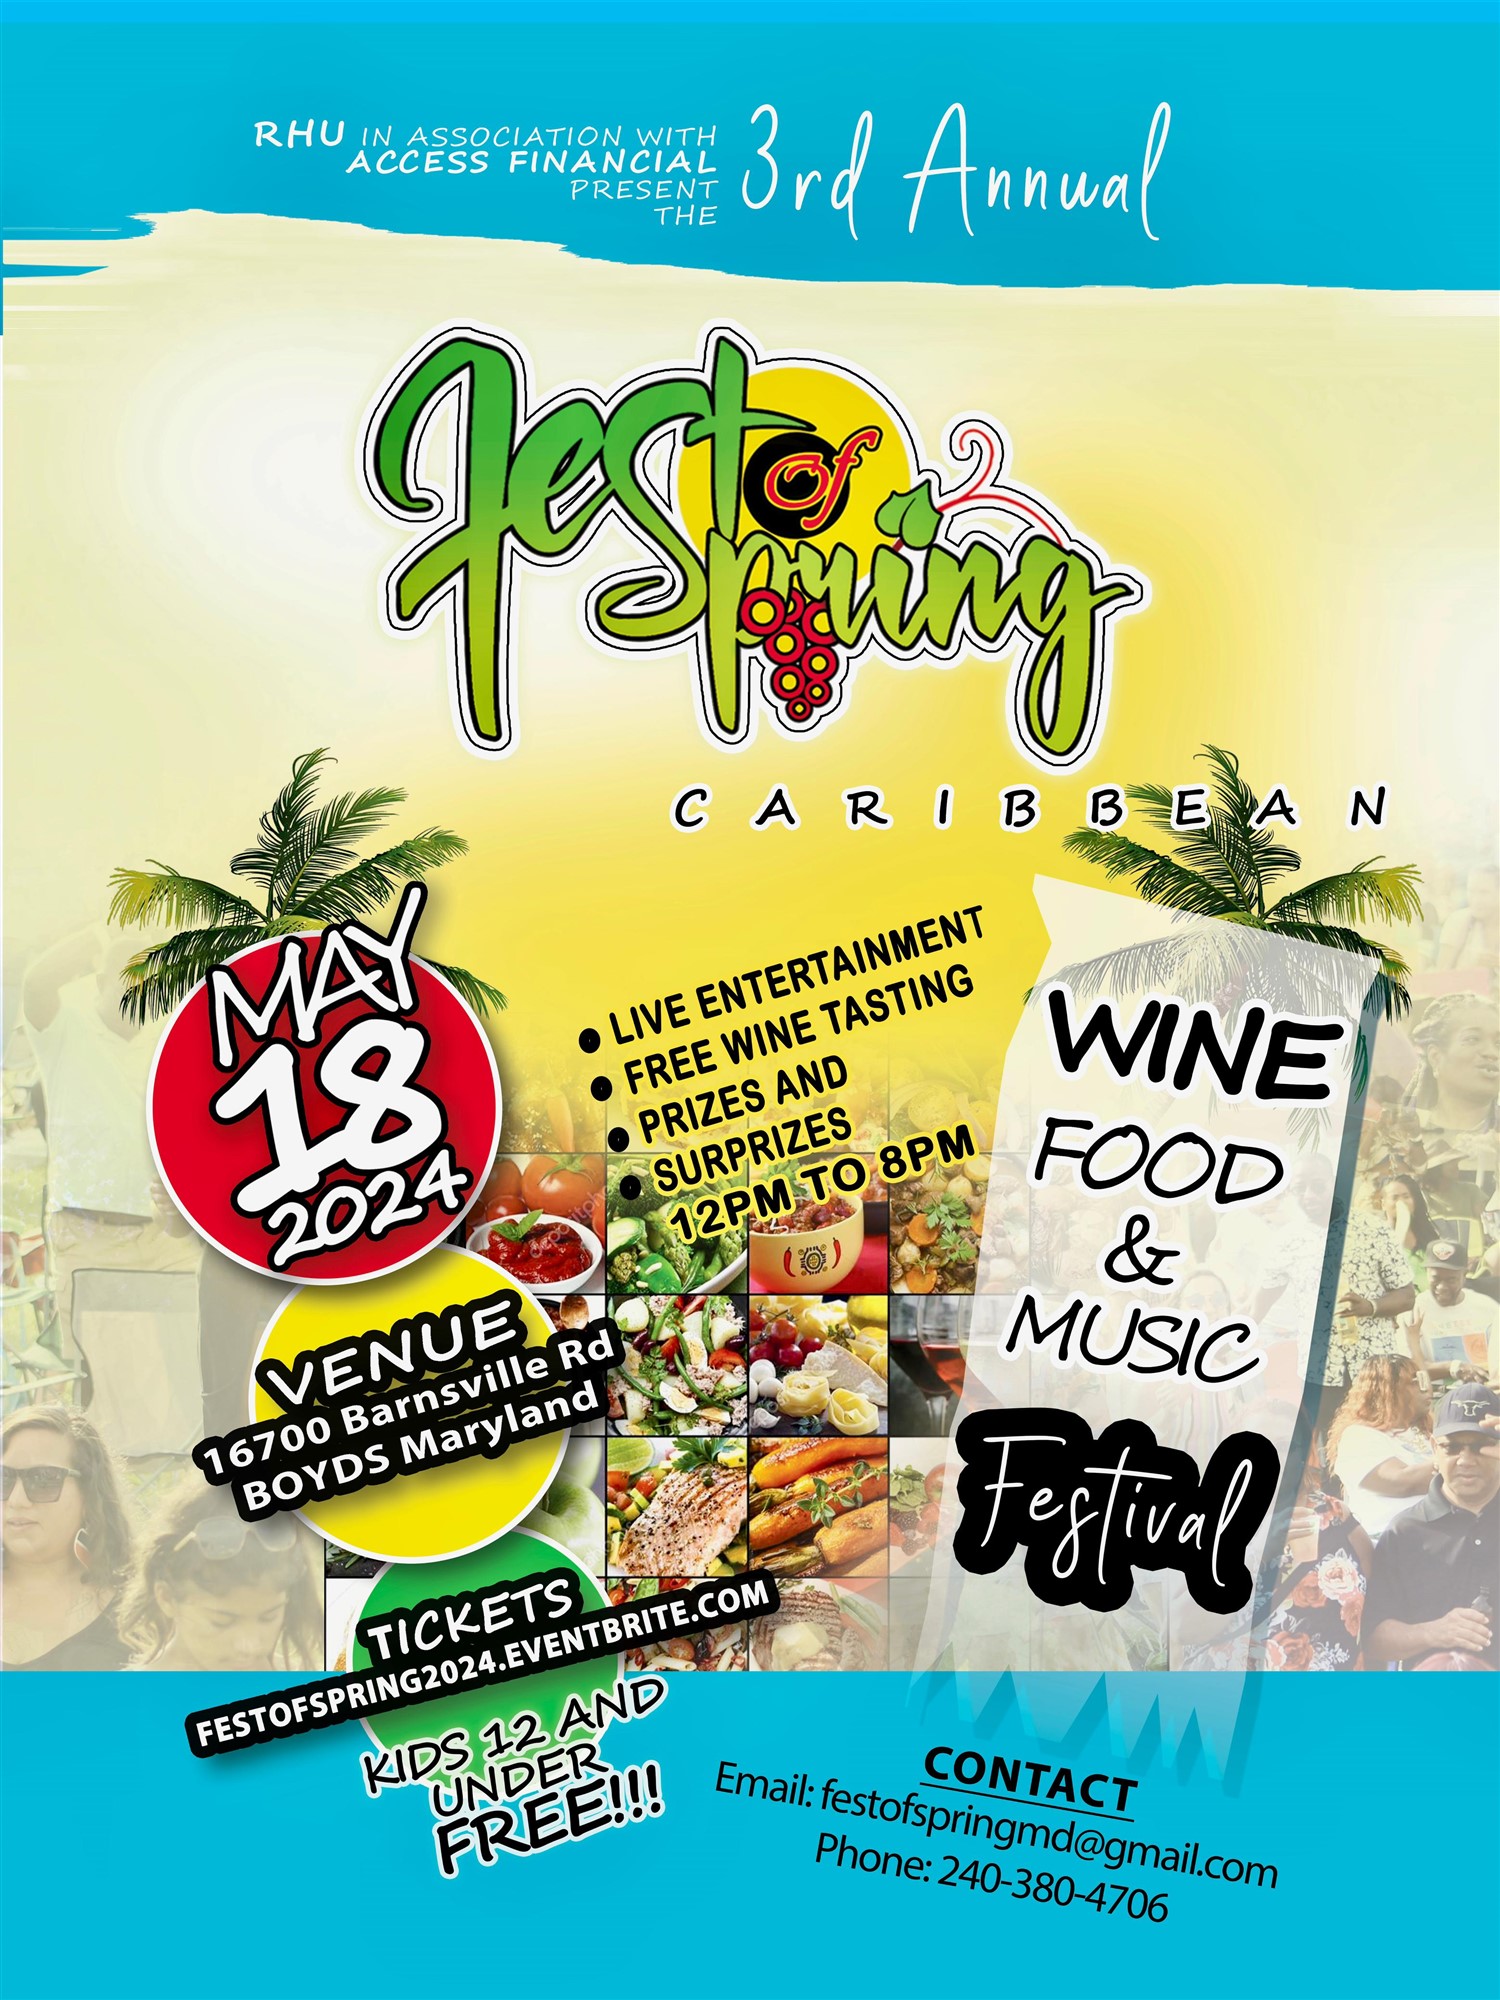 FEST OF SPRING Caribbean Wine Food & Music Festival on may. 18, 00:00@Good News Farm - Compra entradas y obtén información enwww.fetefinders.com tickets.fetefinders.com